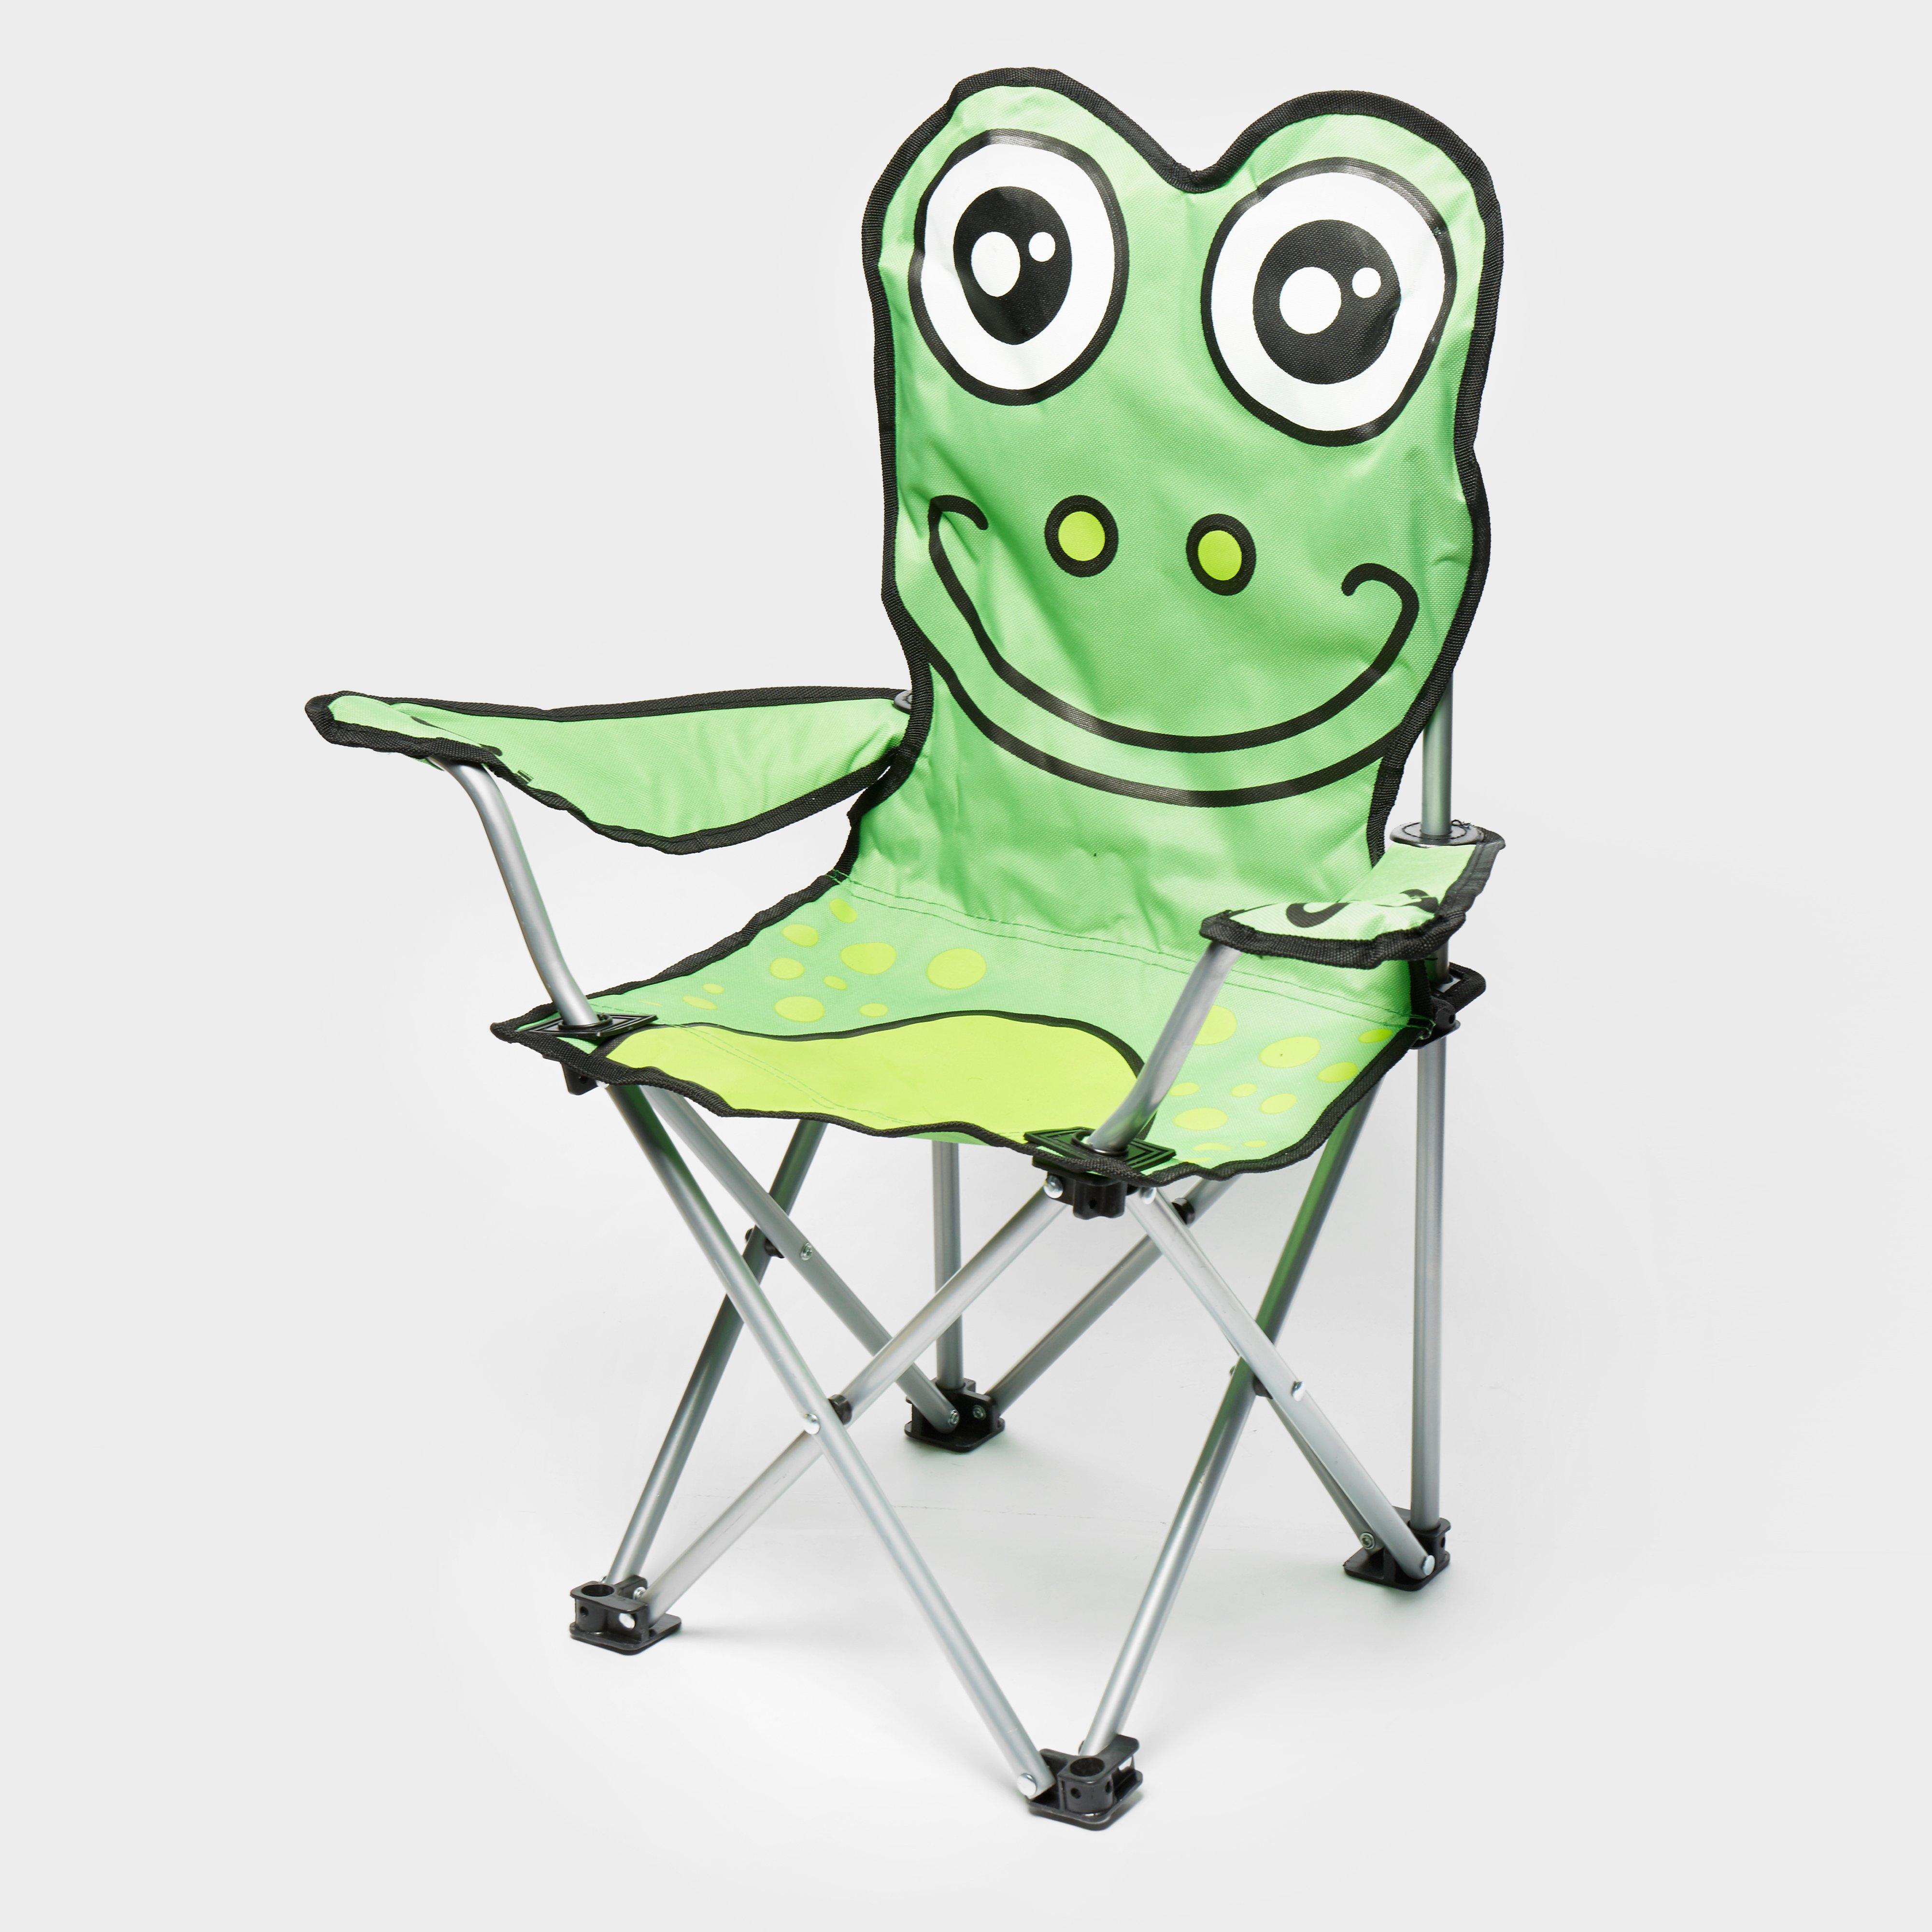 Eurohike Frog Camping Chair - Green/grn  Green/grn